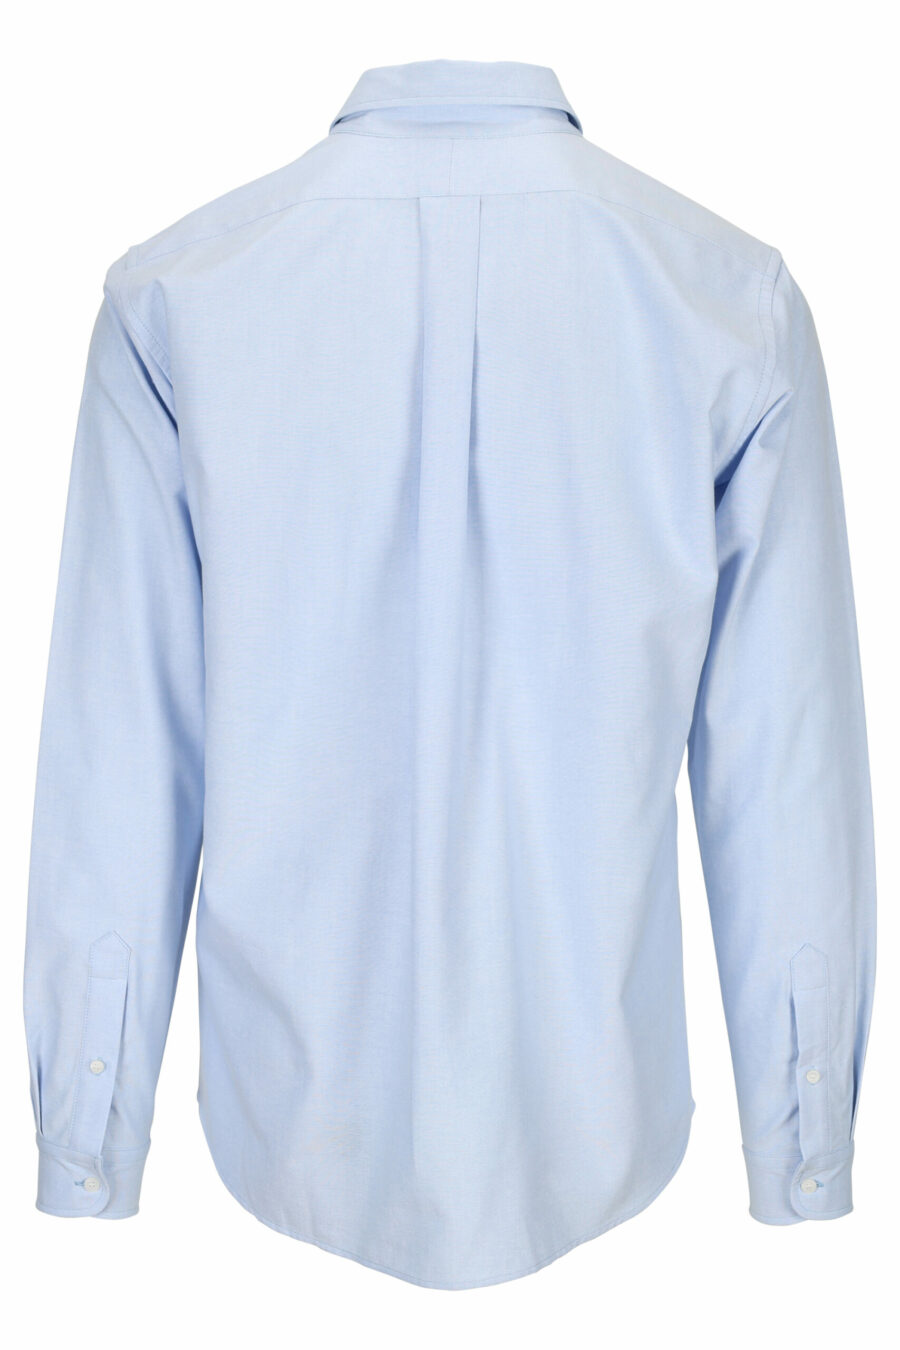 Camisa azul claro con logo "boke flower" - 3612230432536 1 scaled